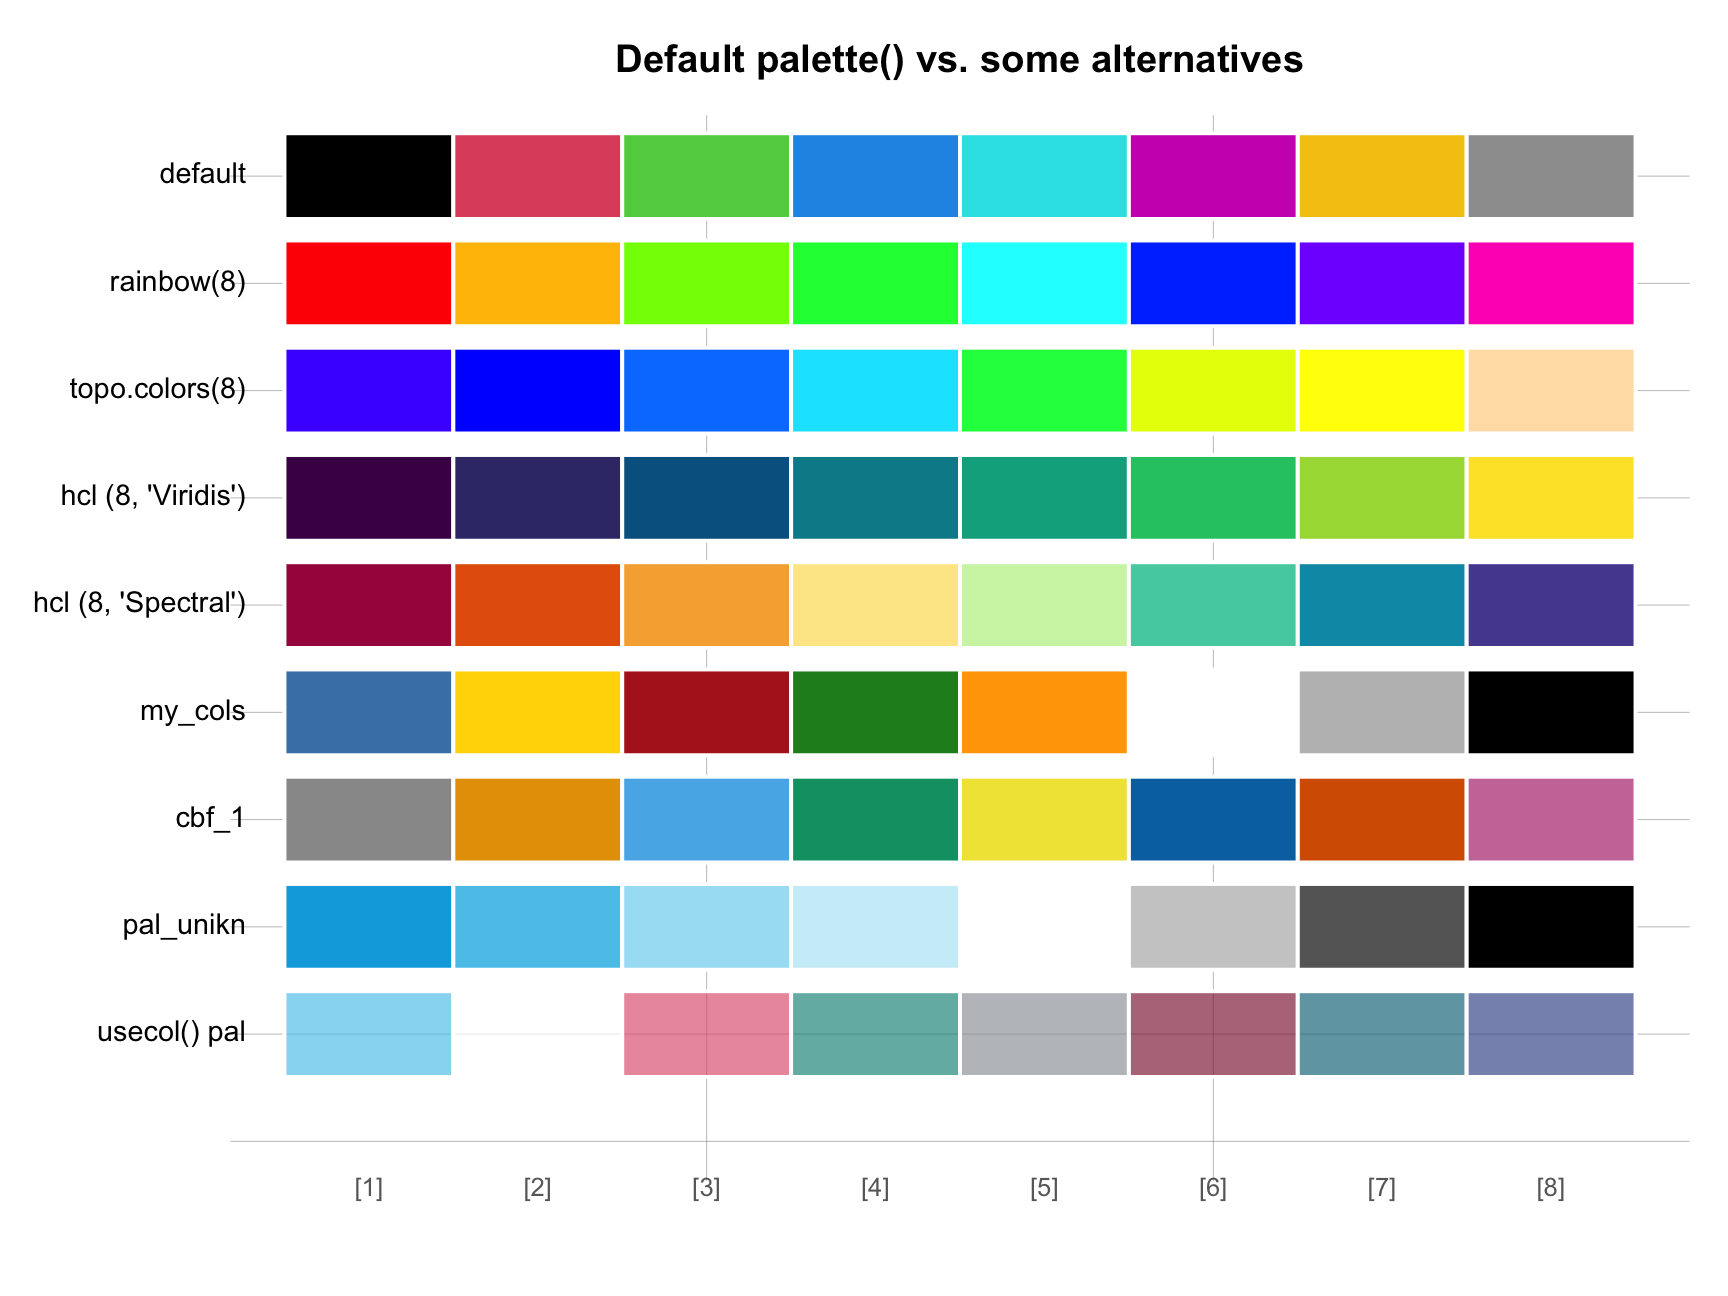 Setting the default palette() to various alternative color palettes.